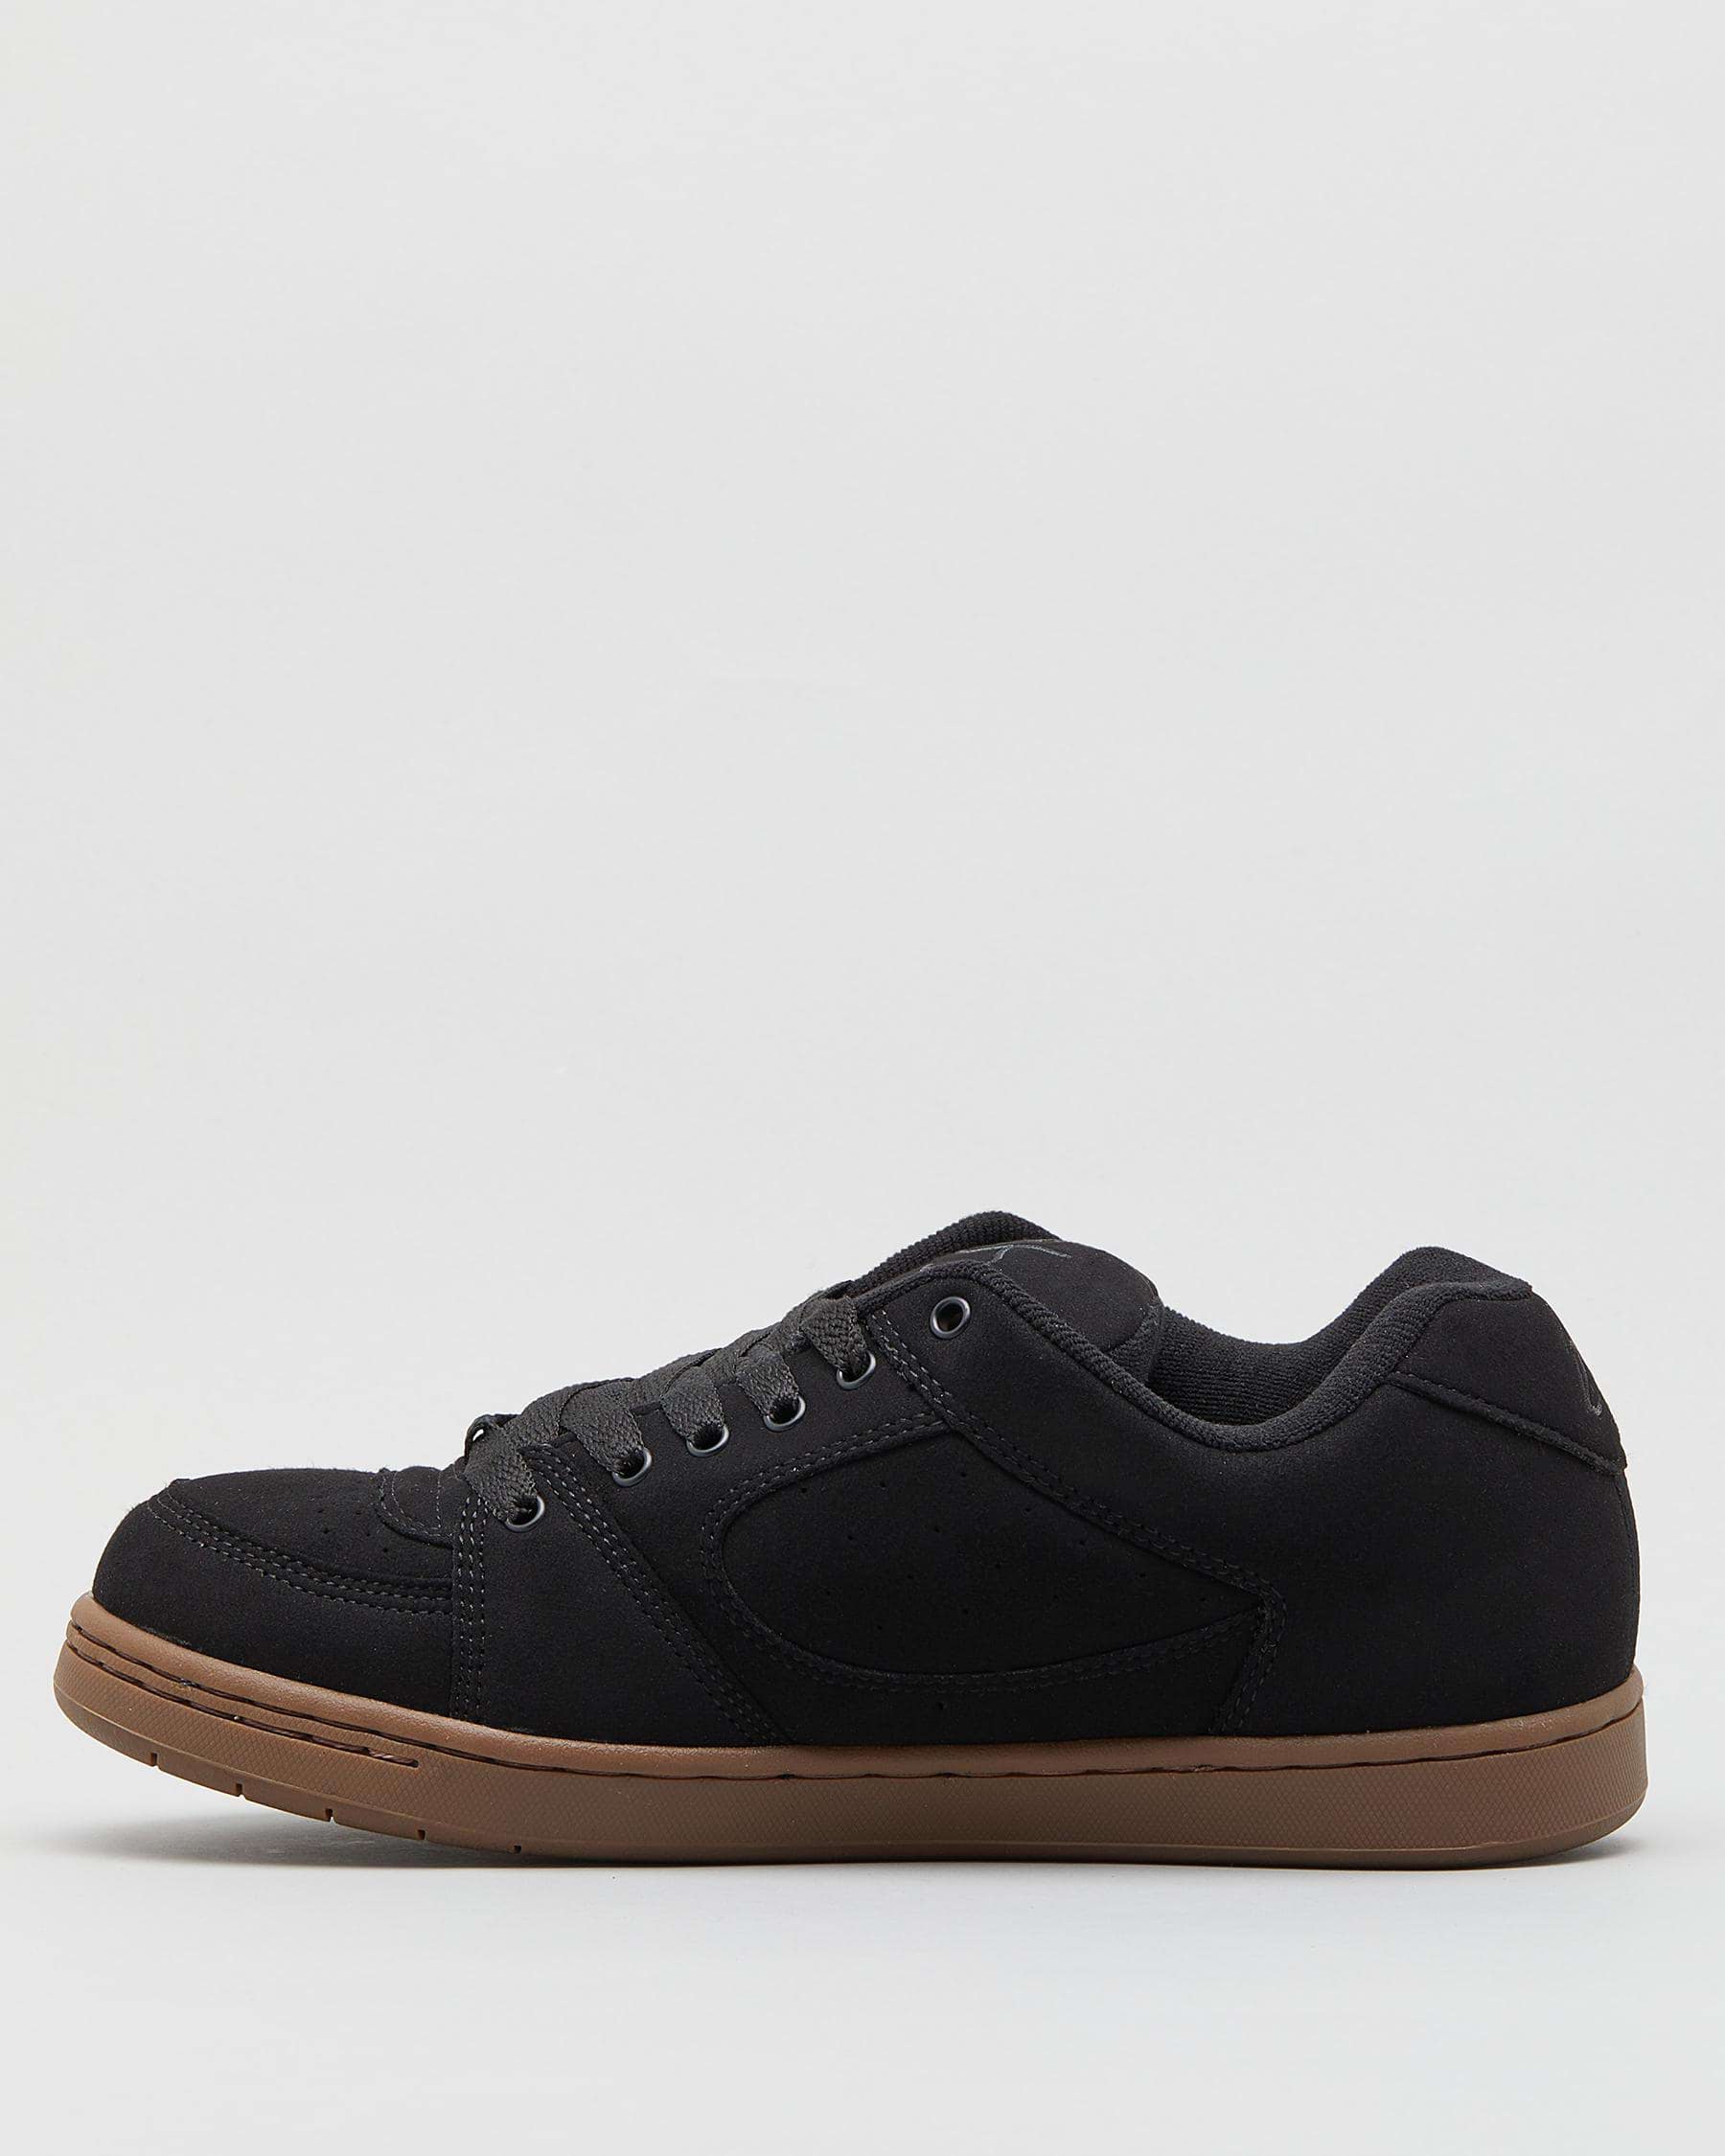 Shop Es Accel OG Shoes In Black/charcoal/gum - Fast Shipping & Easy ...